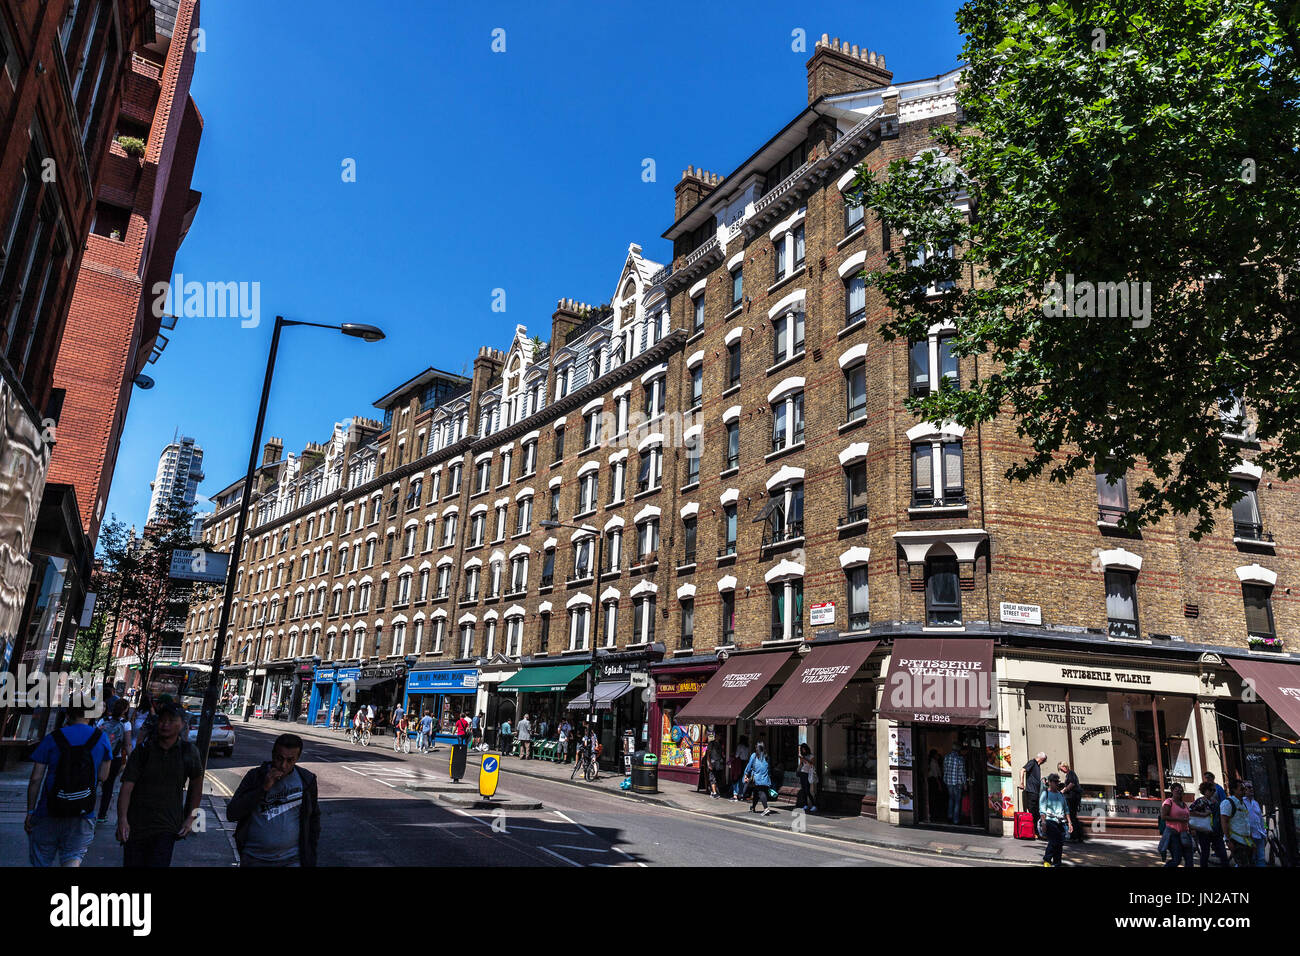 Charing Cross Road street scene, London, England, UK. Stock Photo